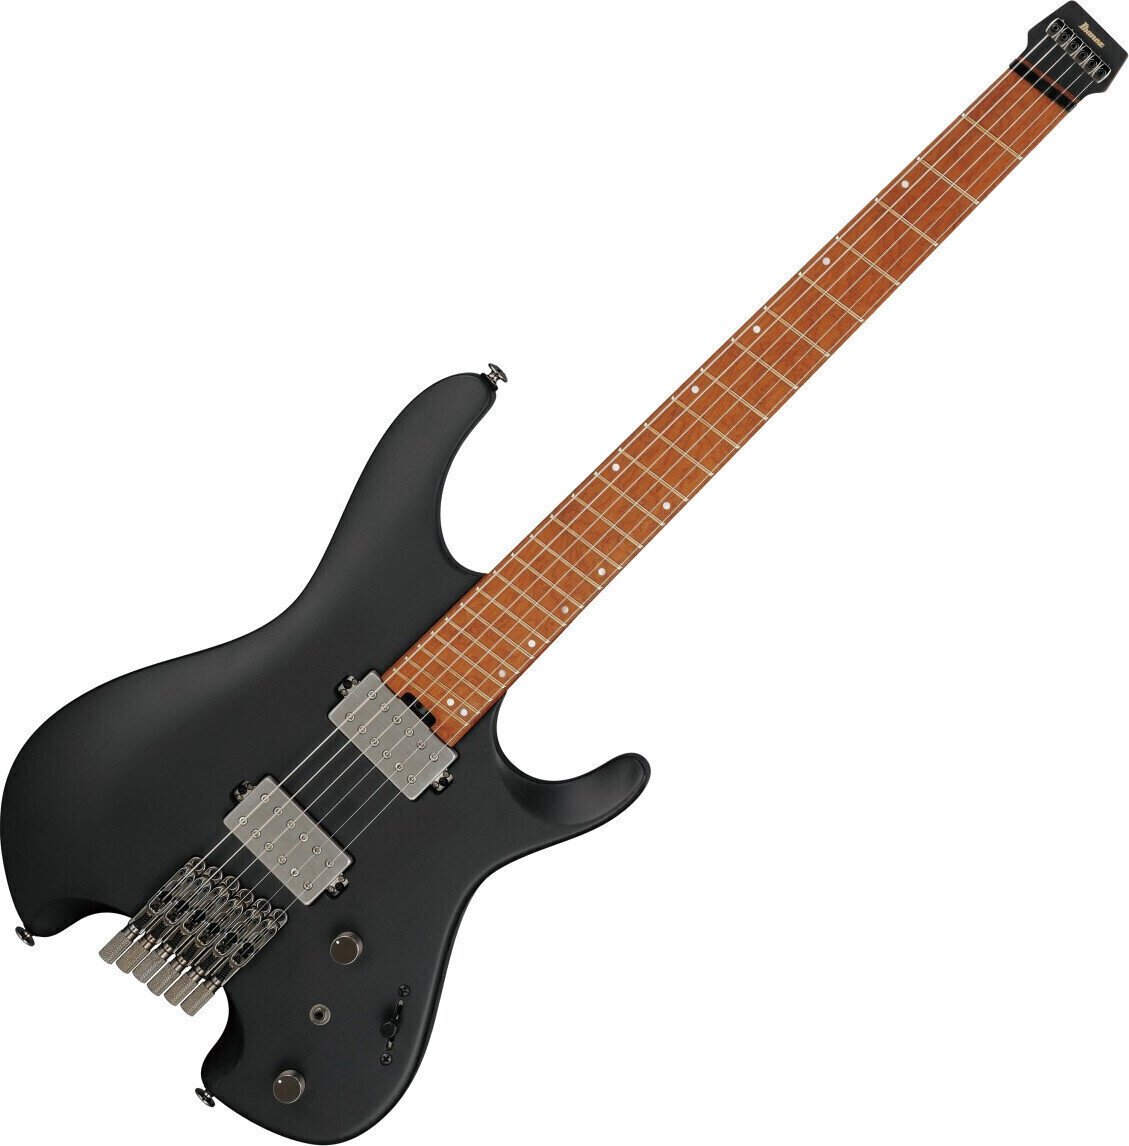 Headless gitaar Ibanez QX52-BKF Black Flat